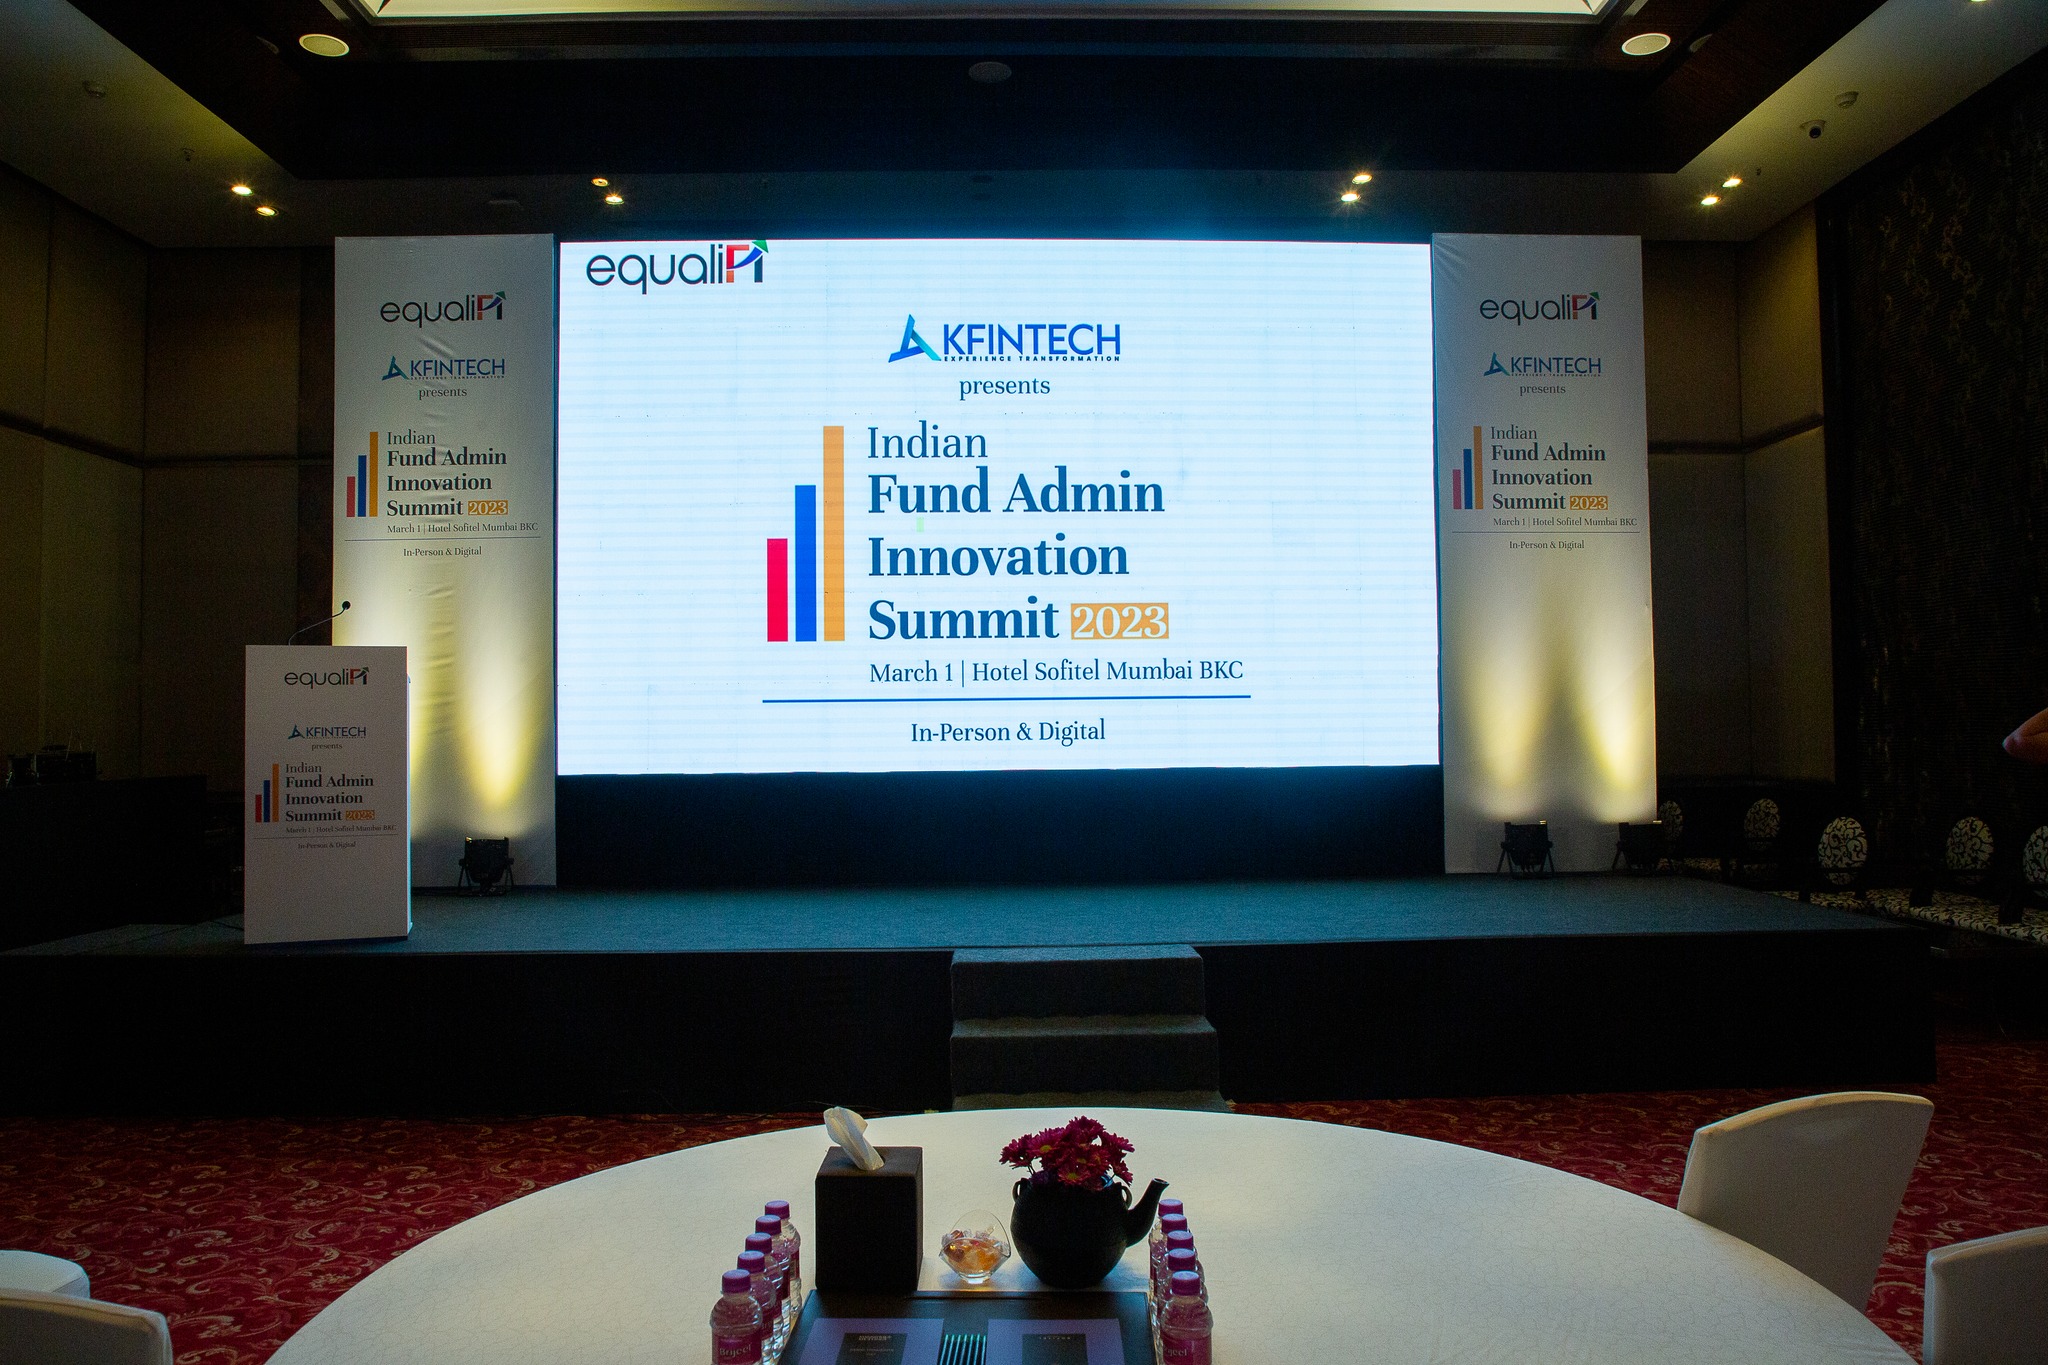 Indian Fund Admin Innovation Summit 2023